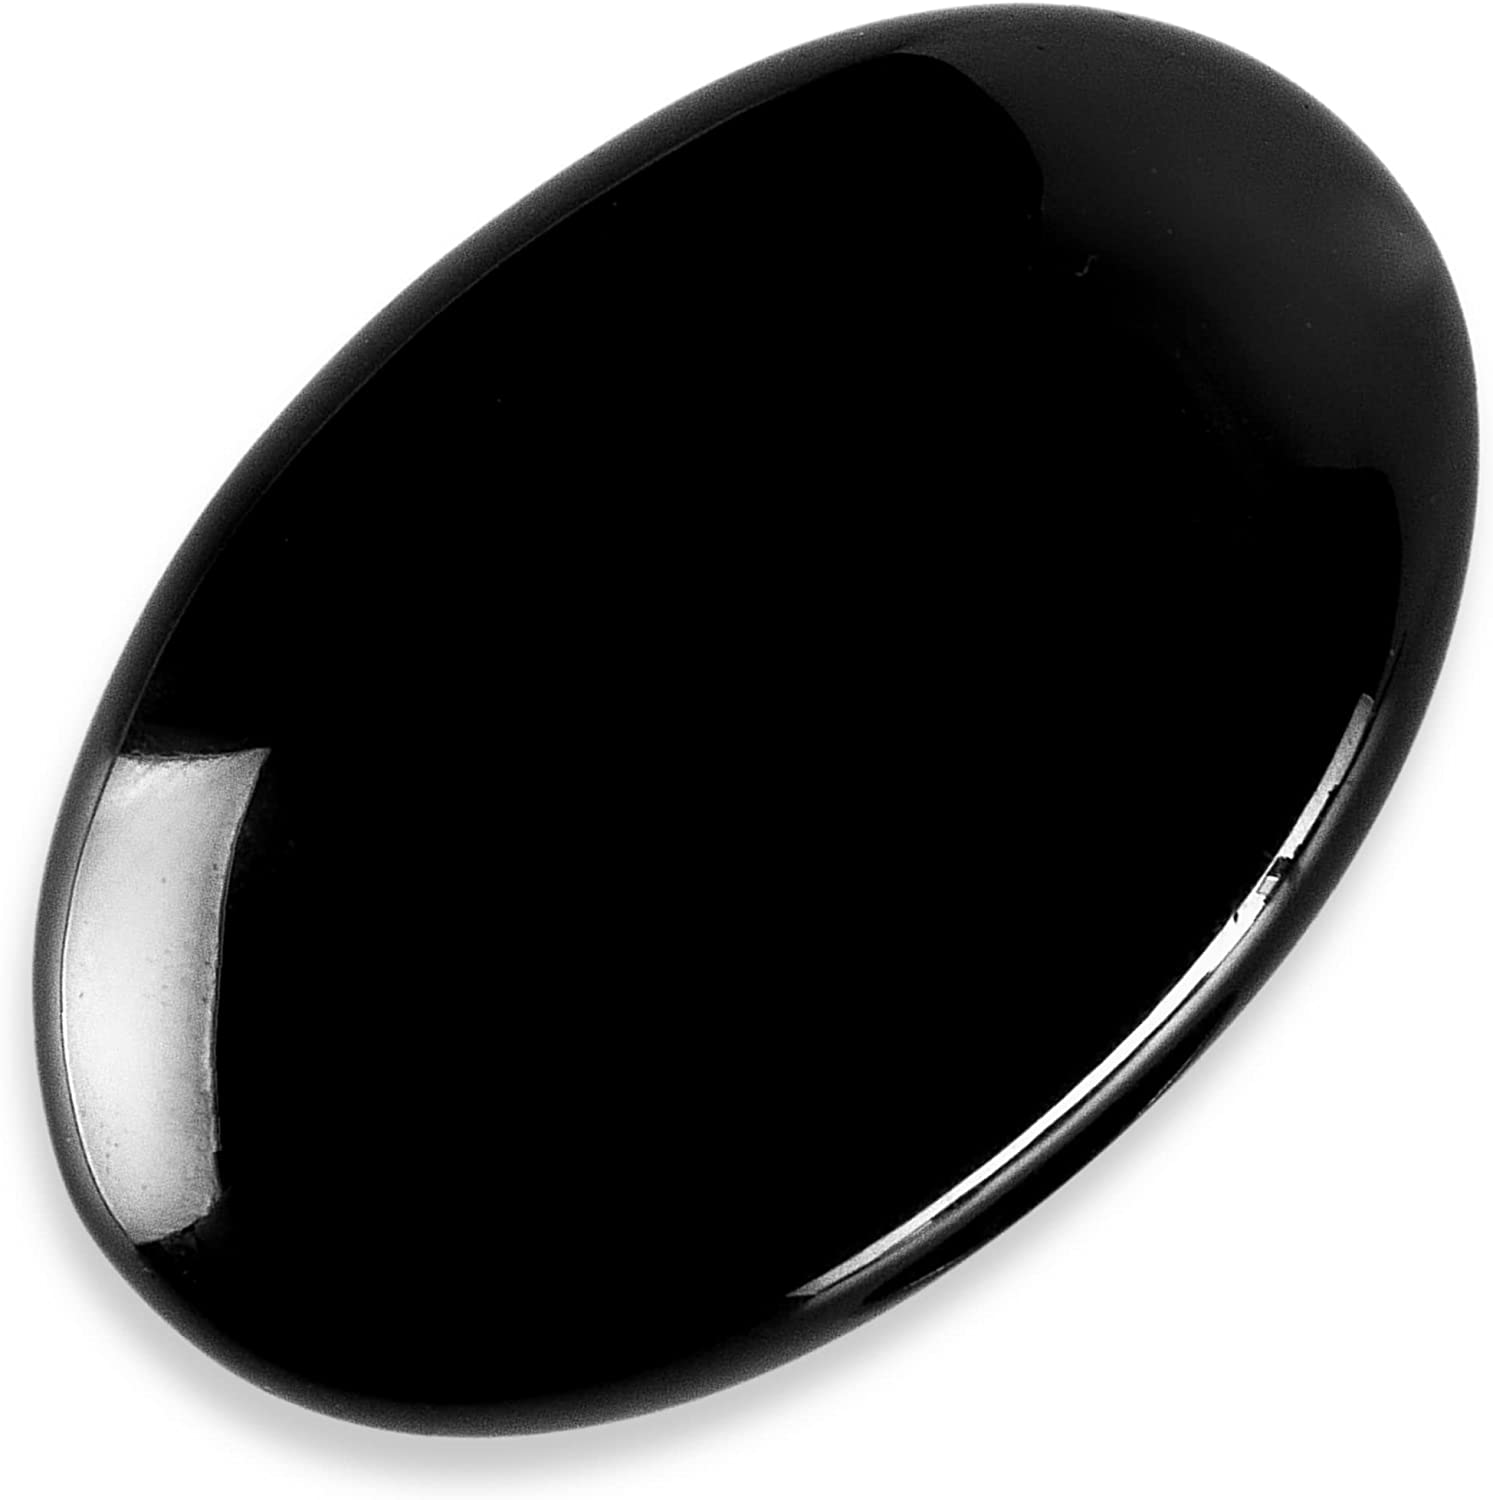 KALIFANO Obsidian Palm Stone PS60-OB